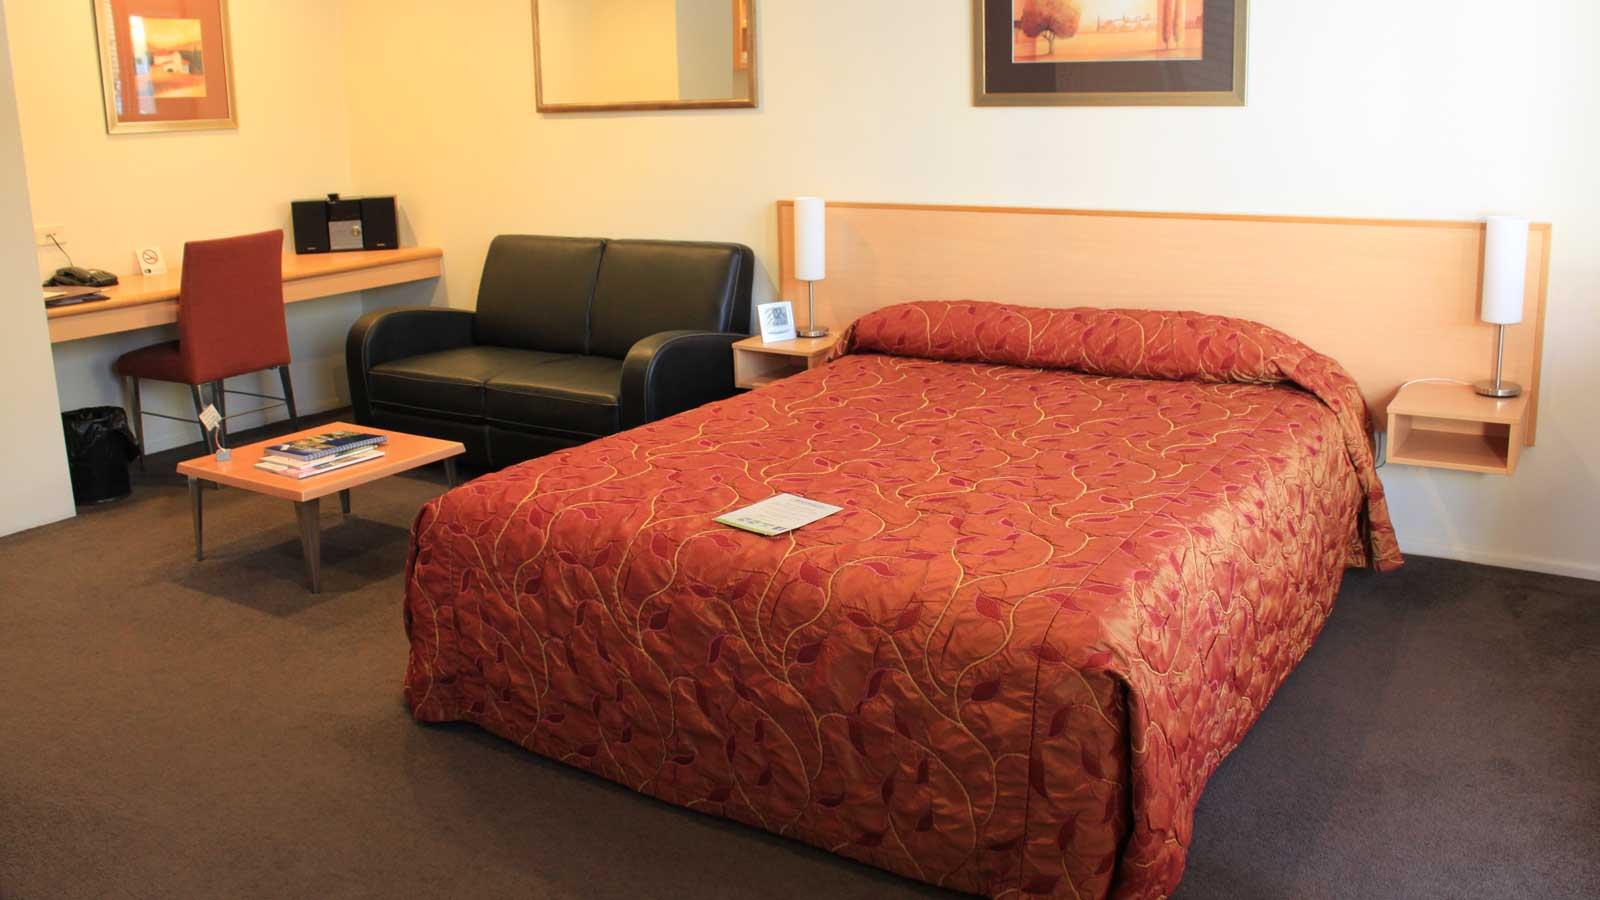 Great Tauranga Motel Accommodation
Harbour City Motor Inn Tauranga Motel